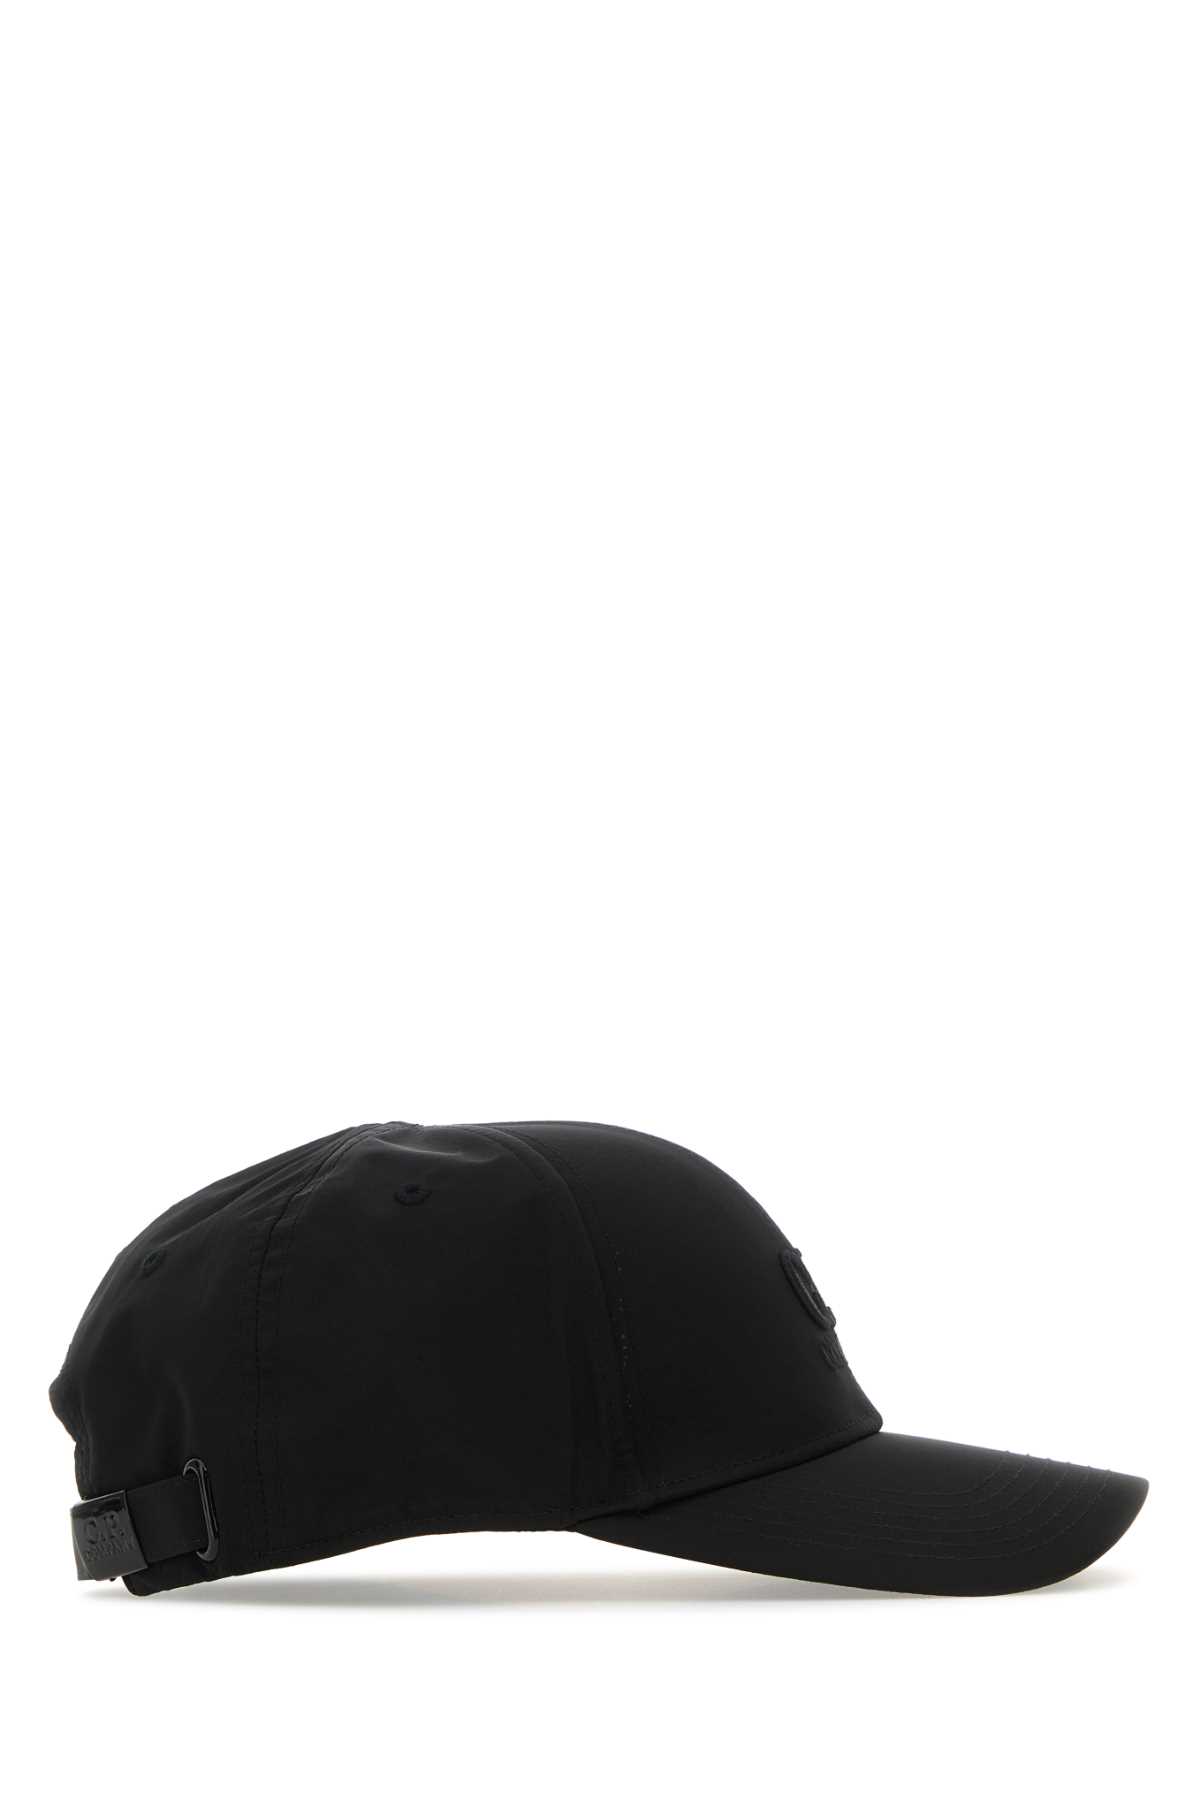 C.p. Company Black Nylon Baseball Cap